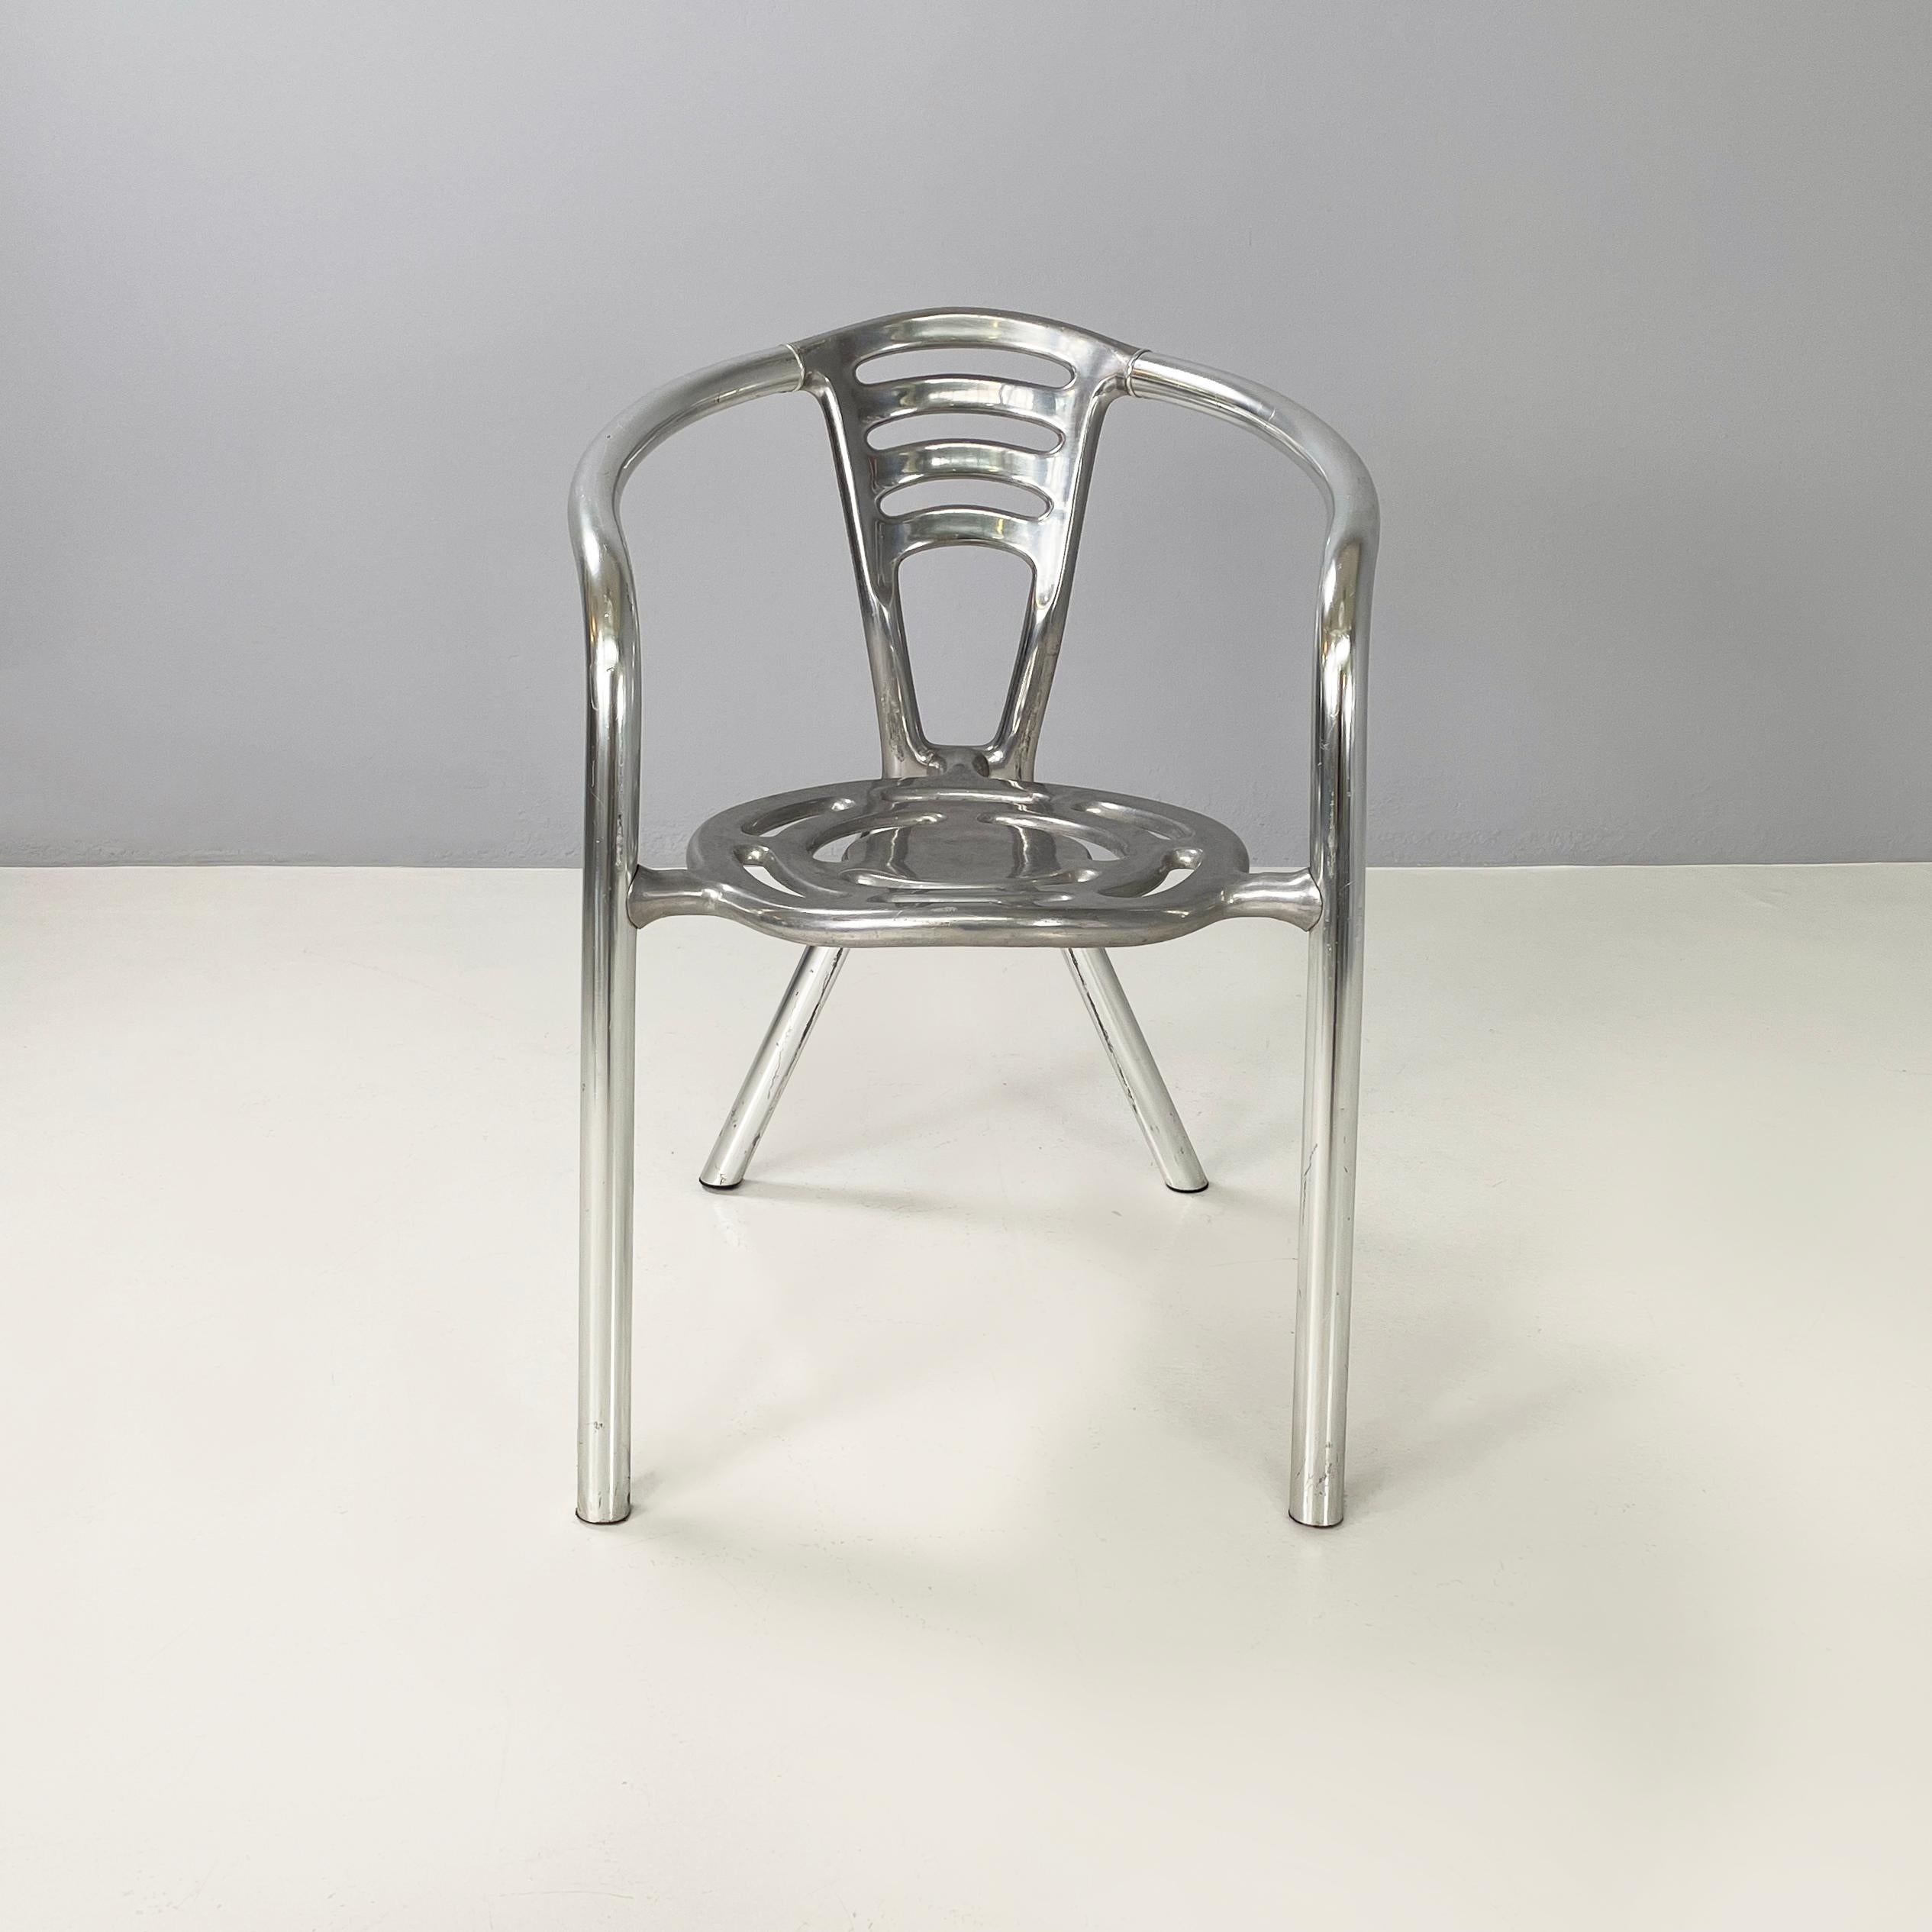 Modern Italian modern Aluminum chairs Boulevard by Porsche for Ycami, 1990s